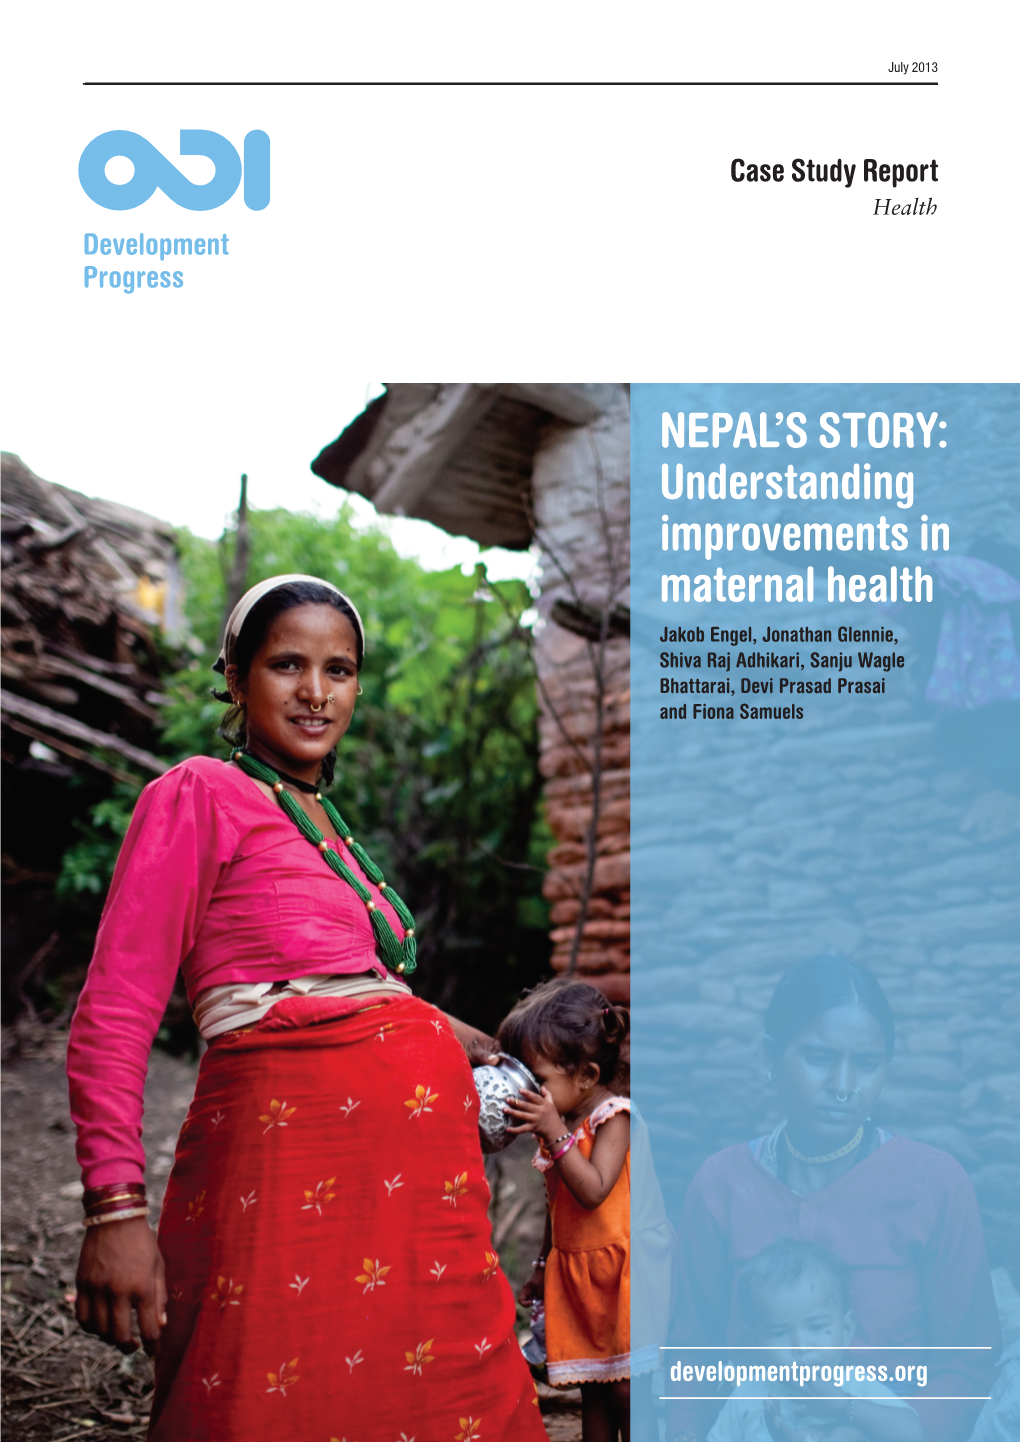 Nepal's Story: Understanding Improvements in Maternal